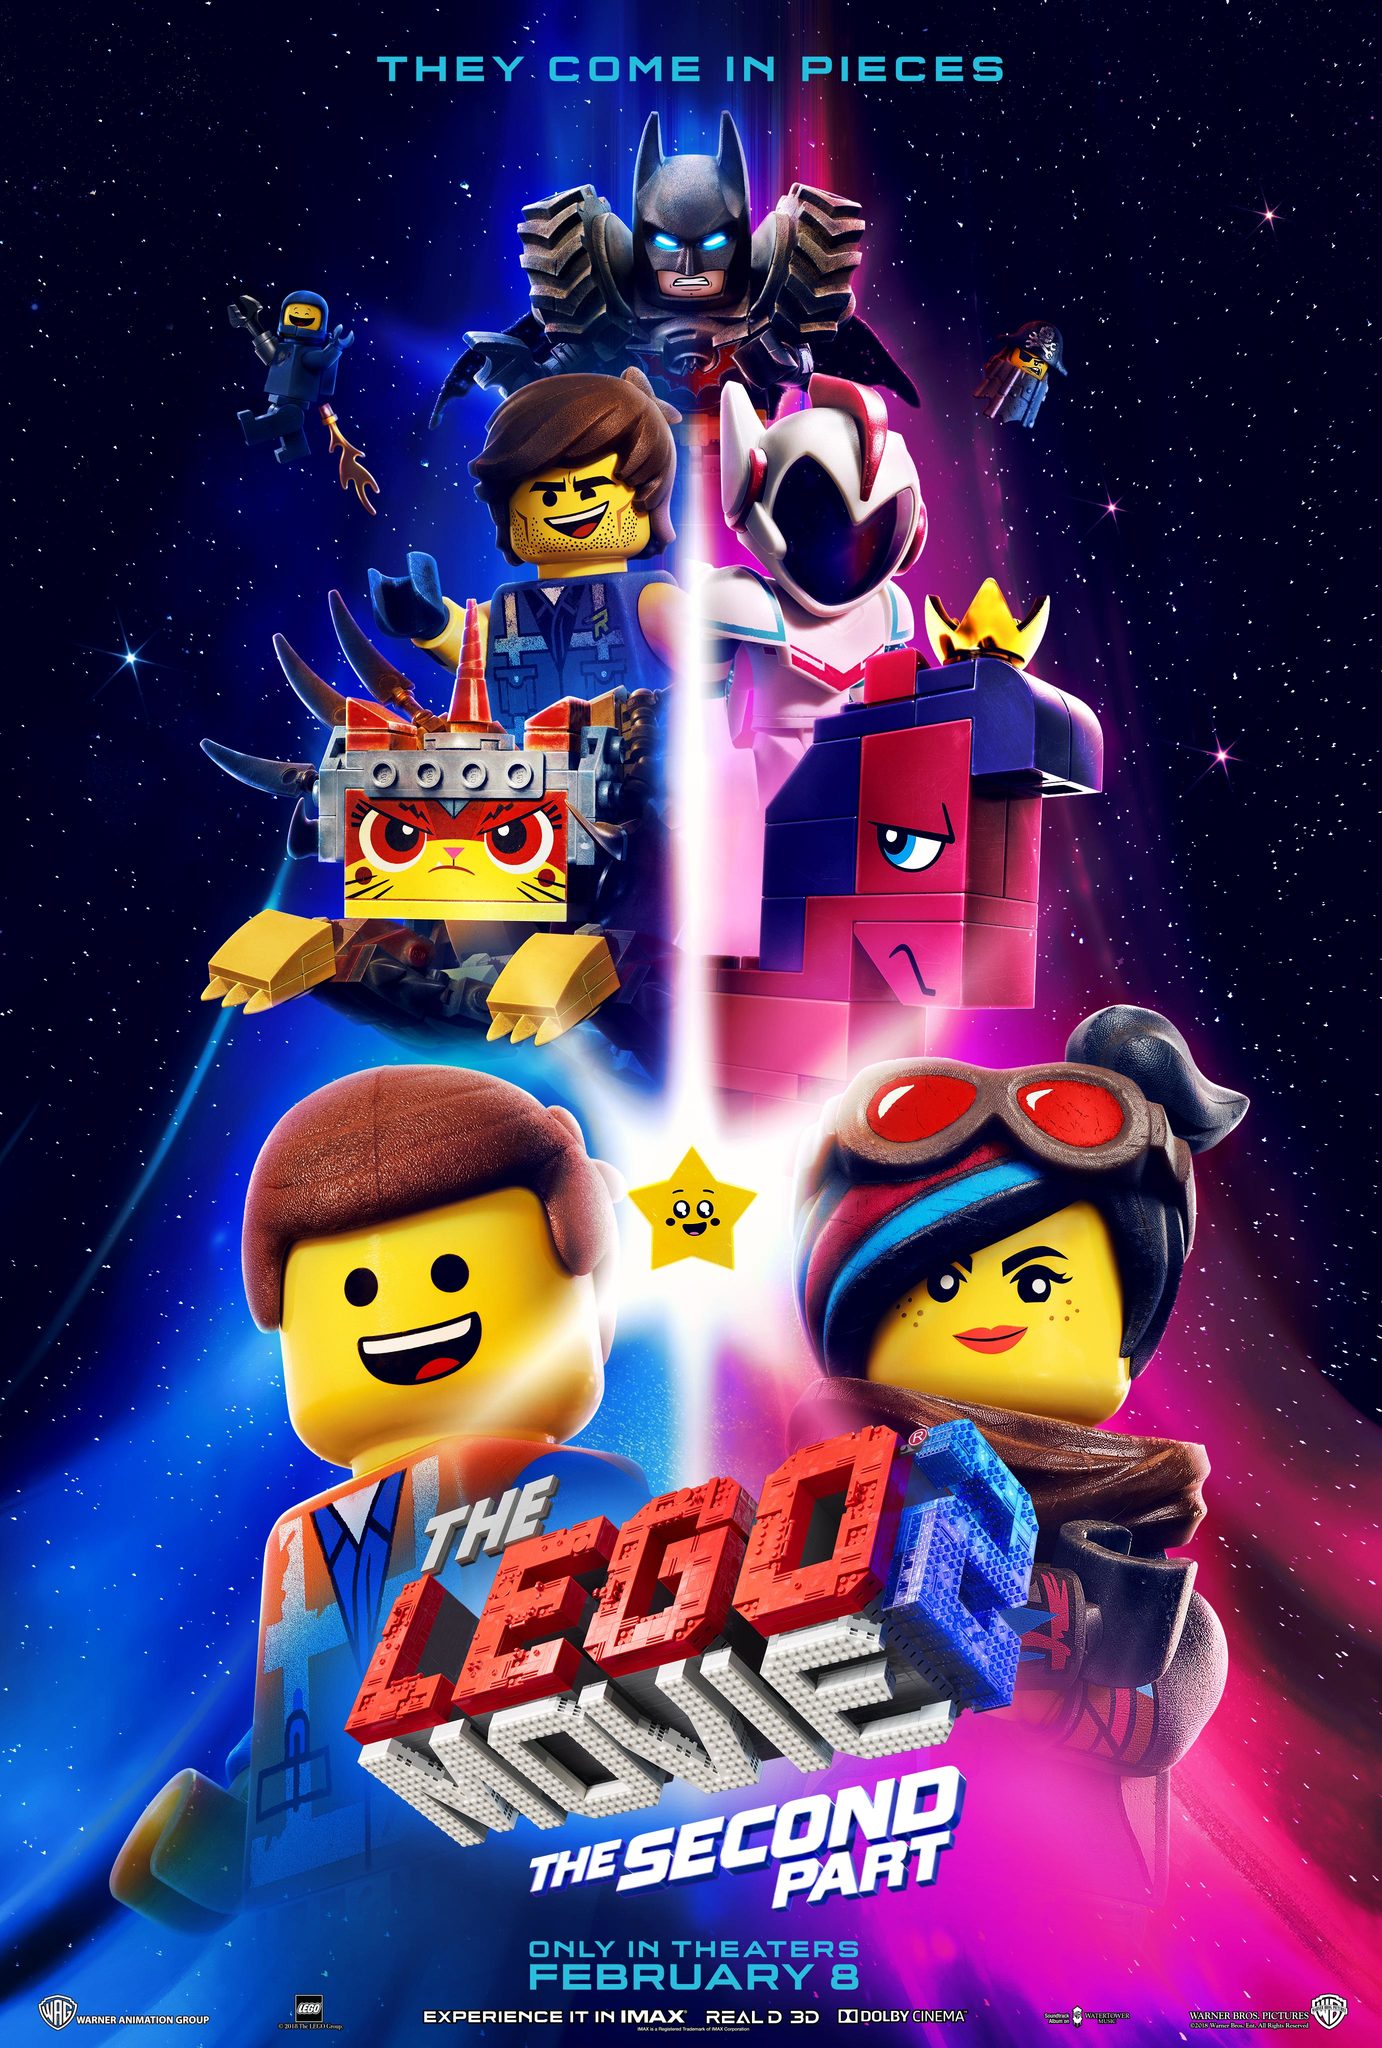 Nonton film The Lego Movie 2: The Second Part layarkaca21 indoxx1 ganool online streaming terbaru